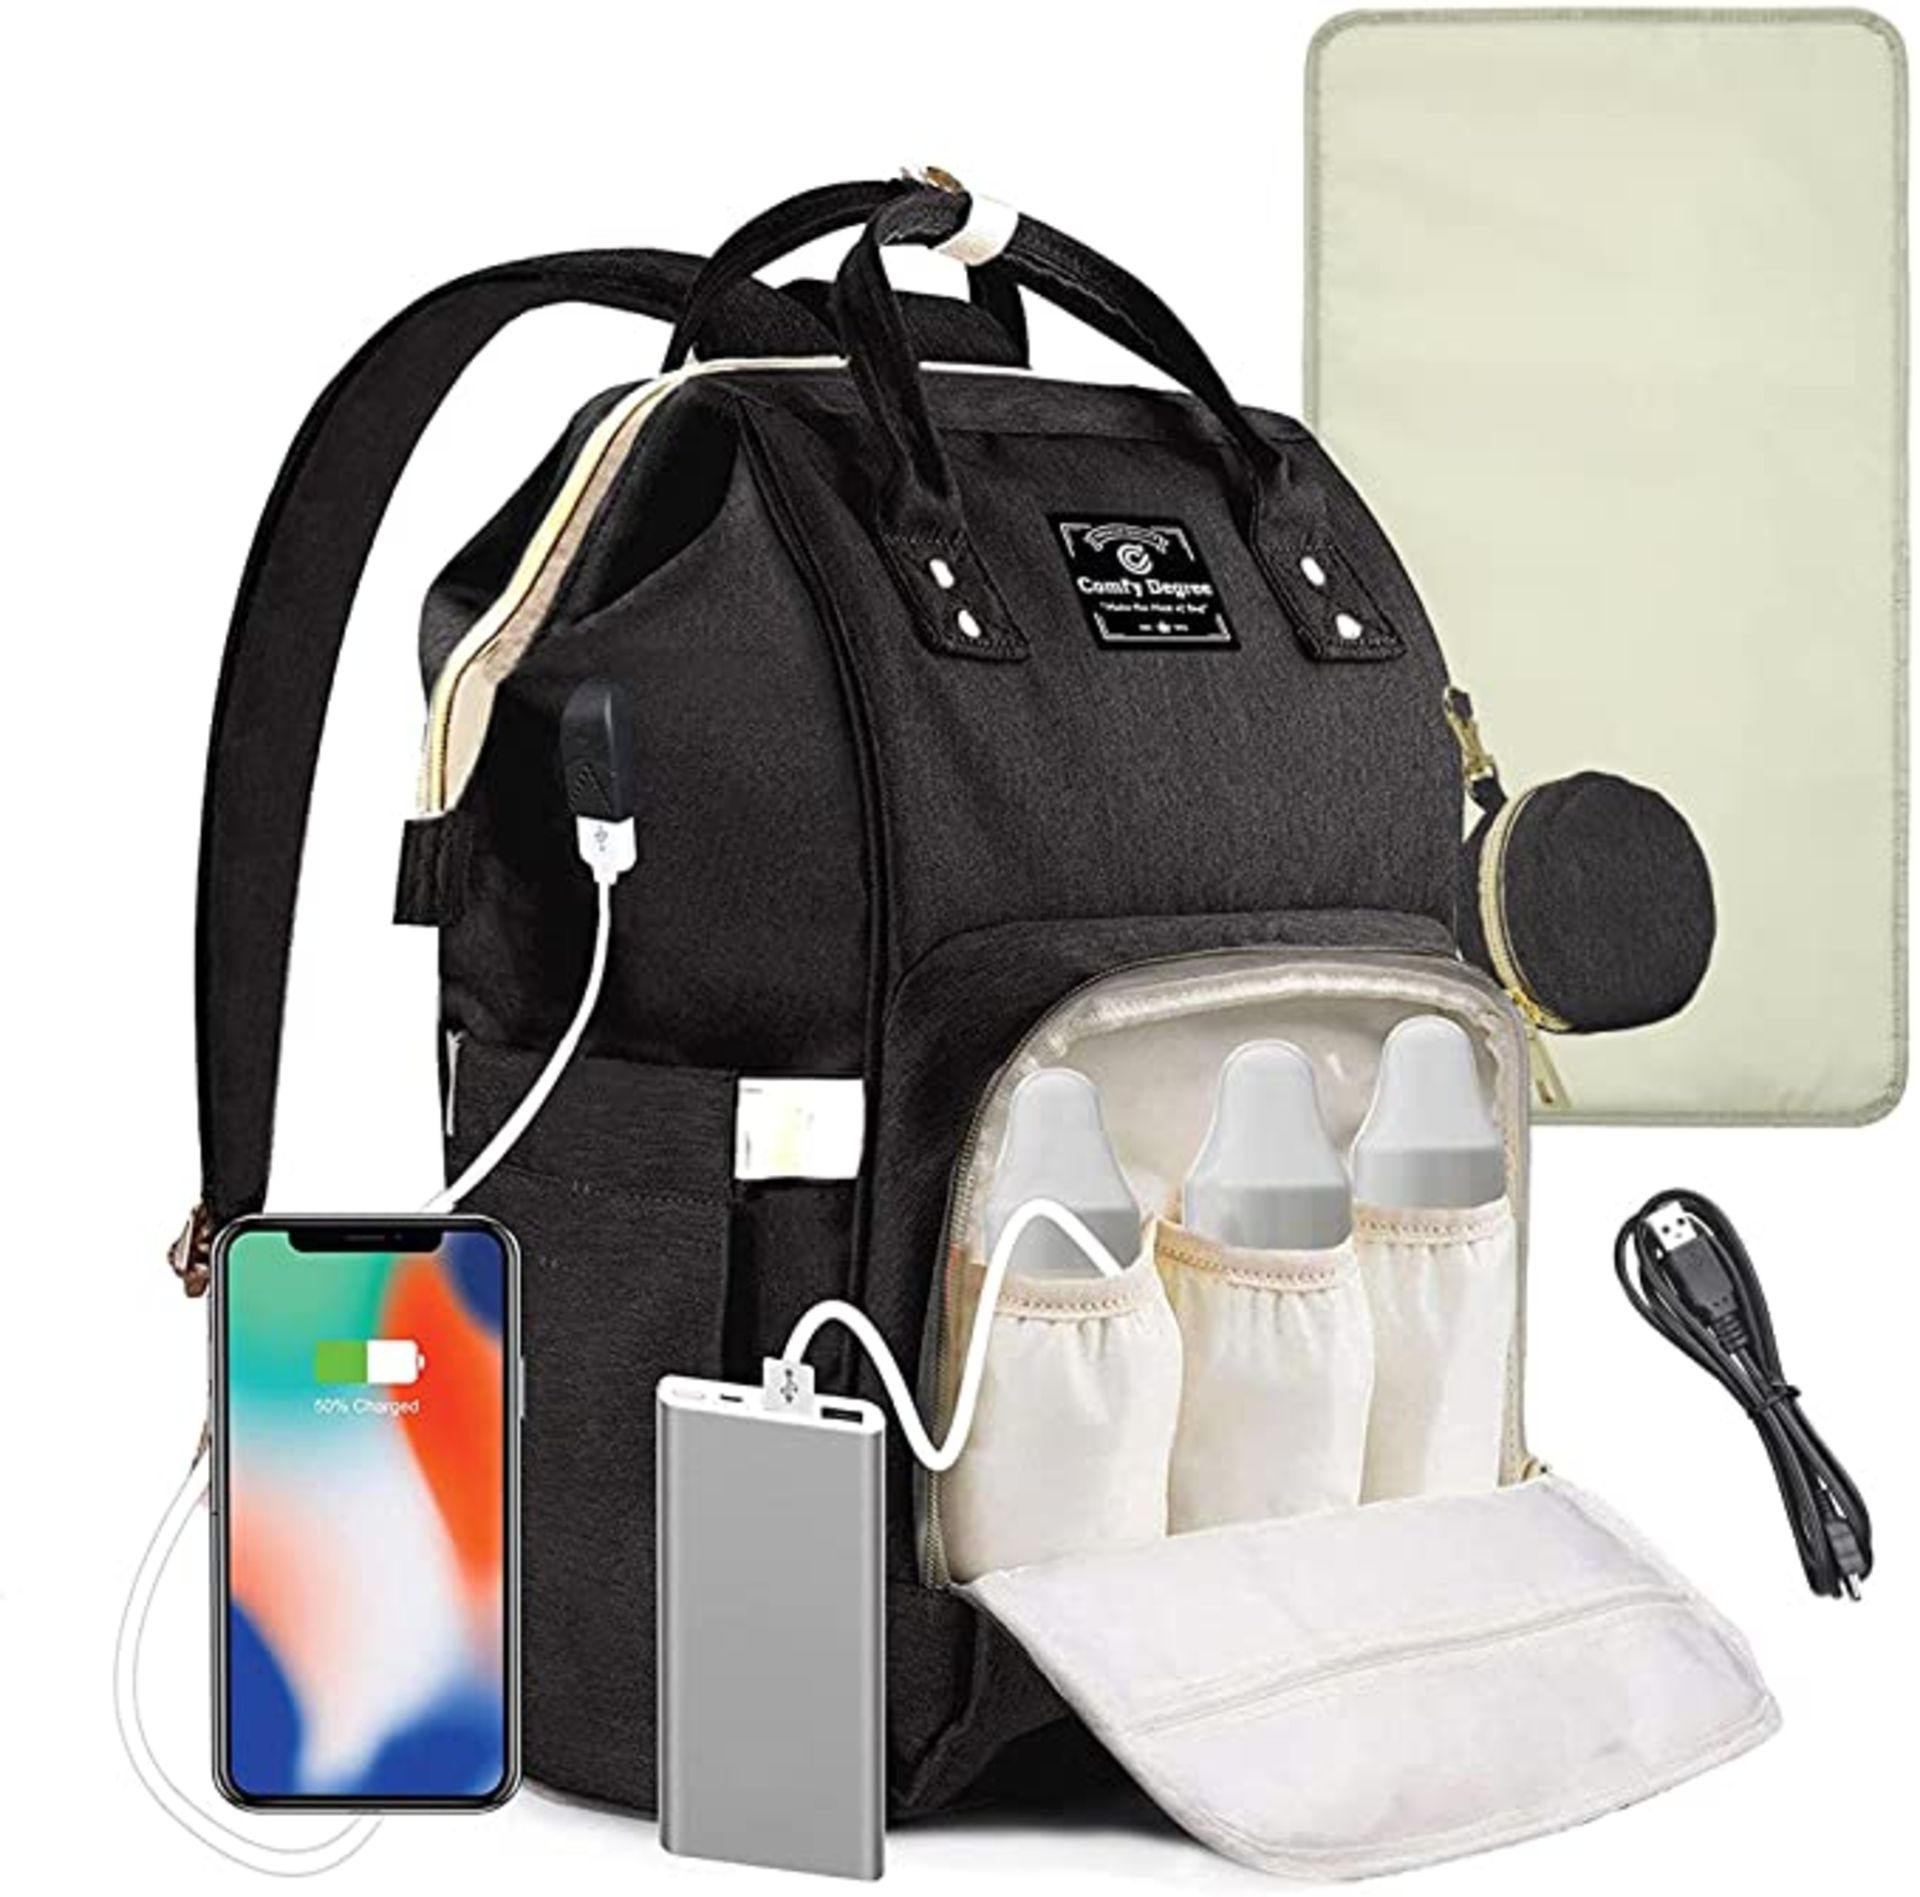 ComfyDegree Waterproof Baby Travel Bag Rucksack w/ Pacifier Holder, USB Port